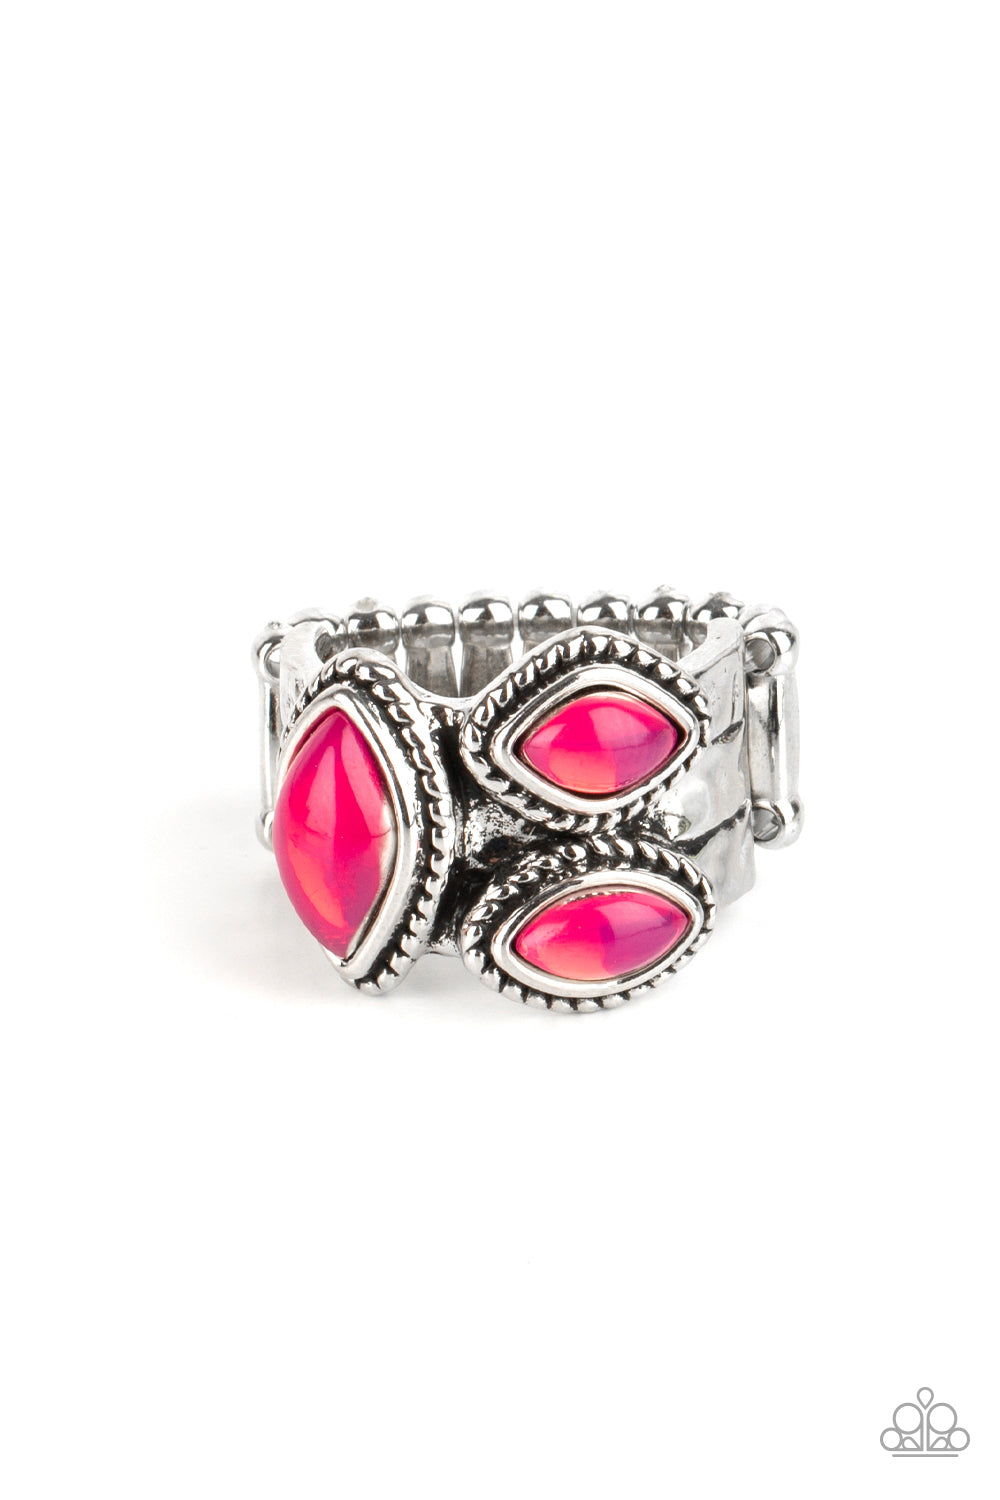 The Charisma Collector - Pink Ring freeshipping - JewLz4u Gemstone Gallery